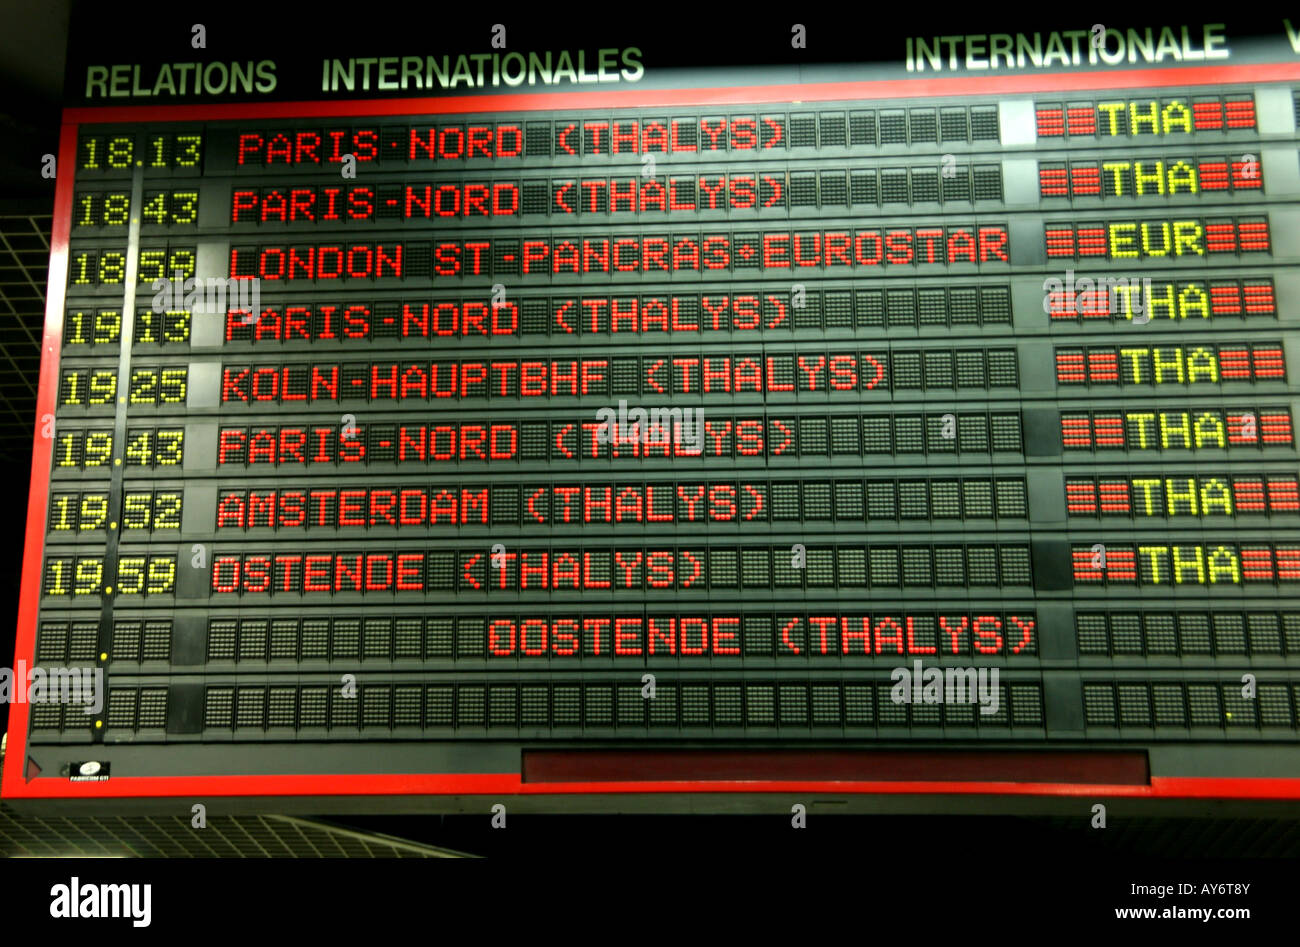 International train departures board in Brussels Midi station Stock Photo